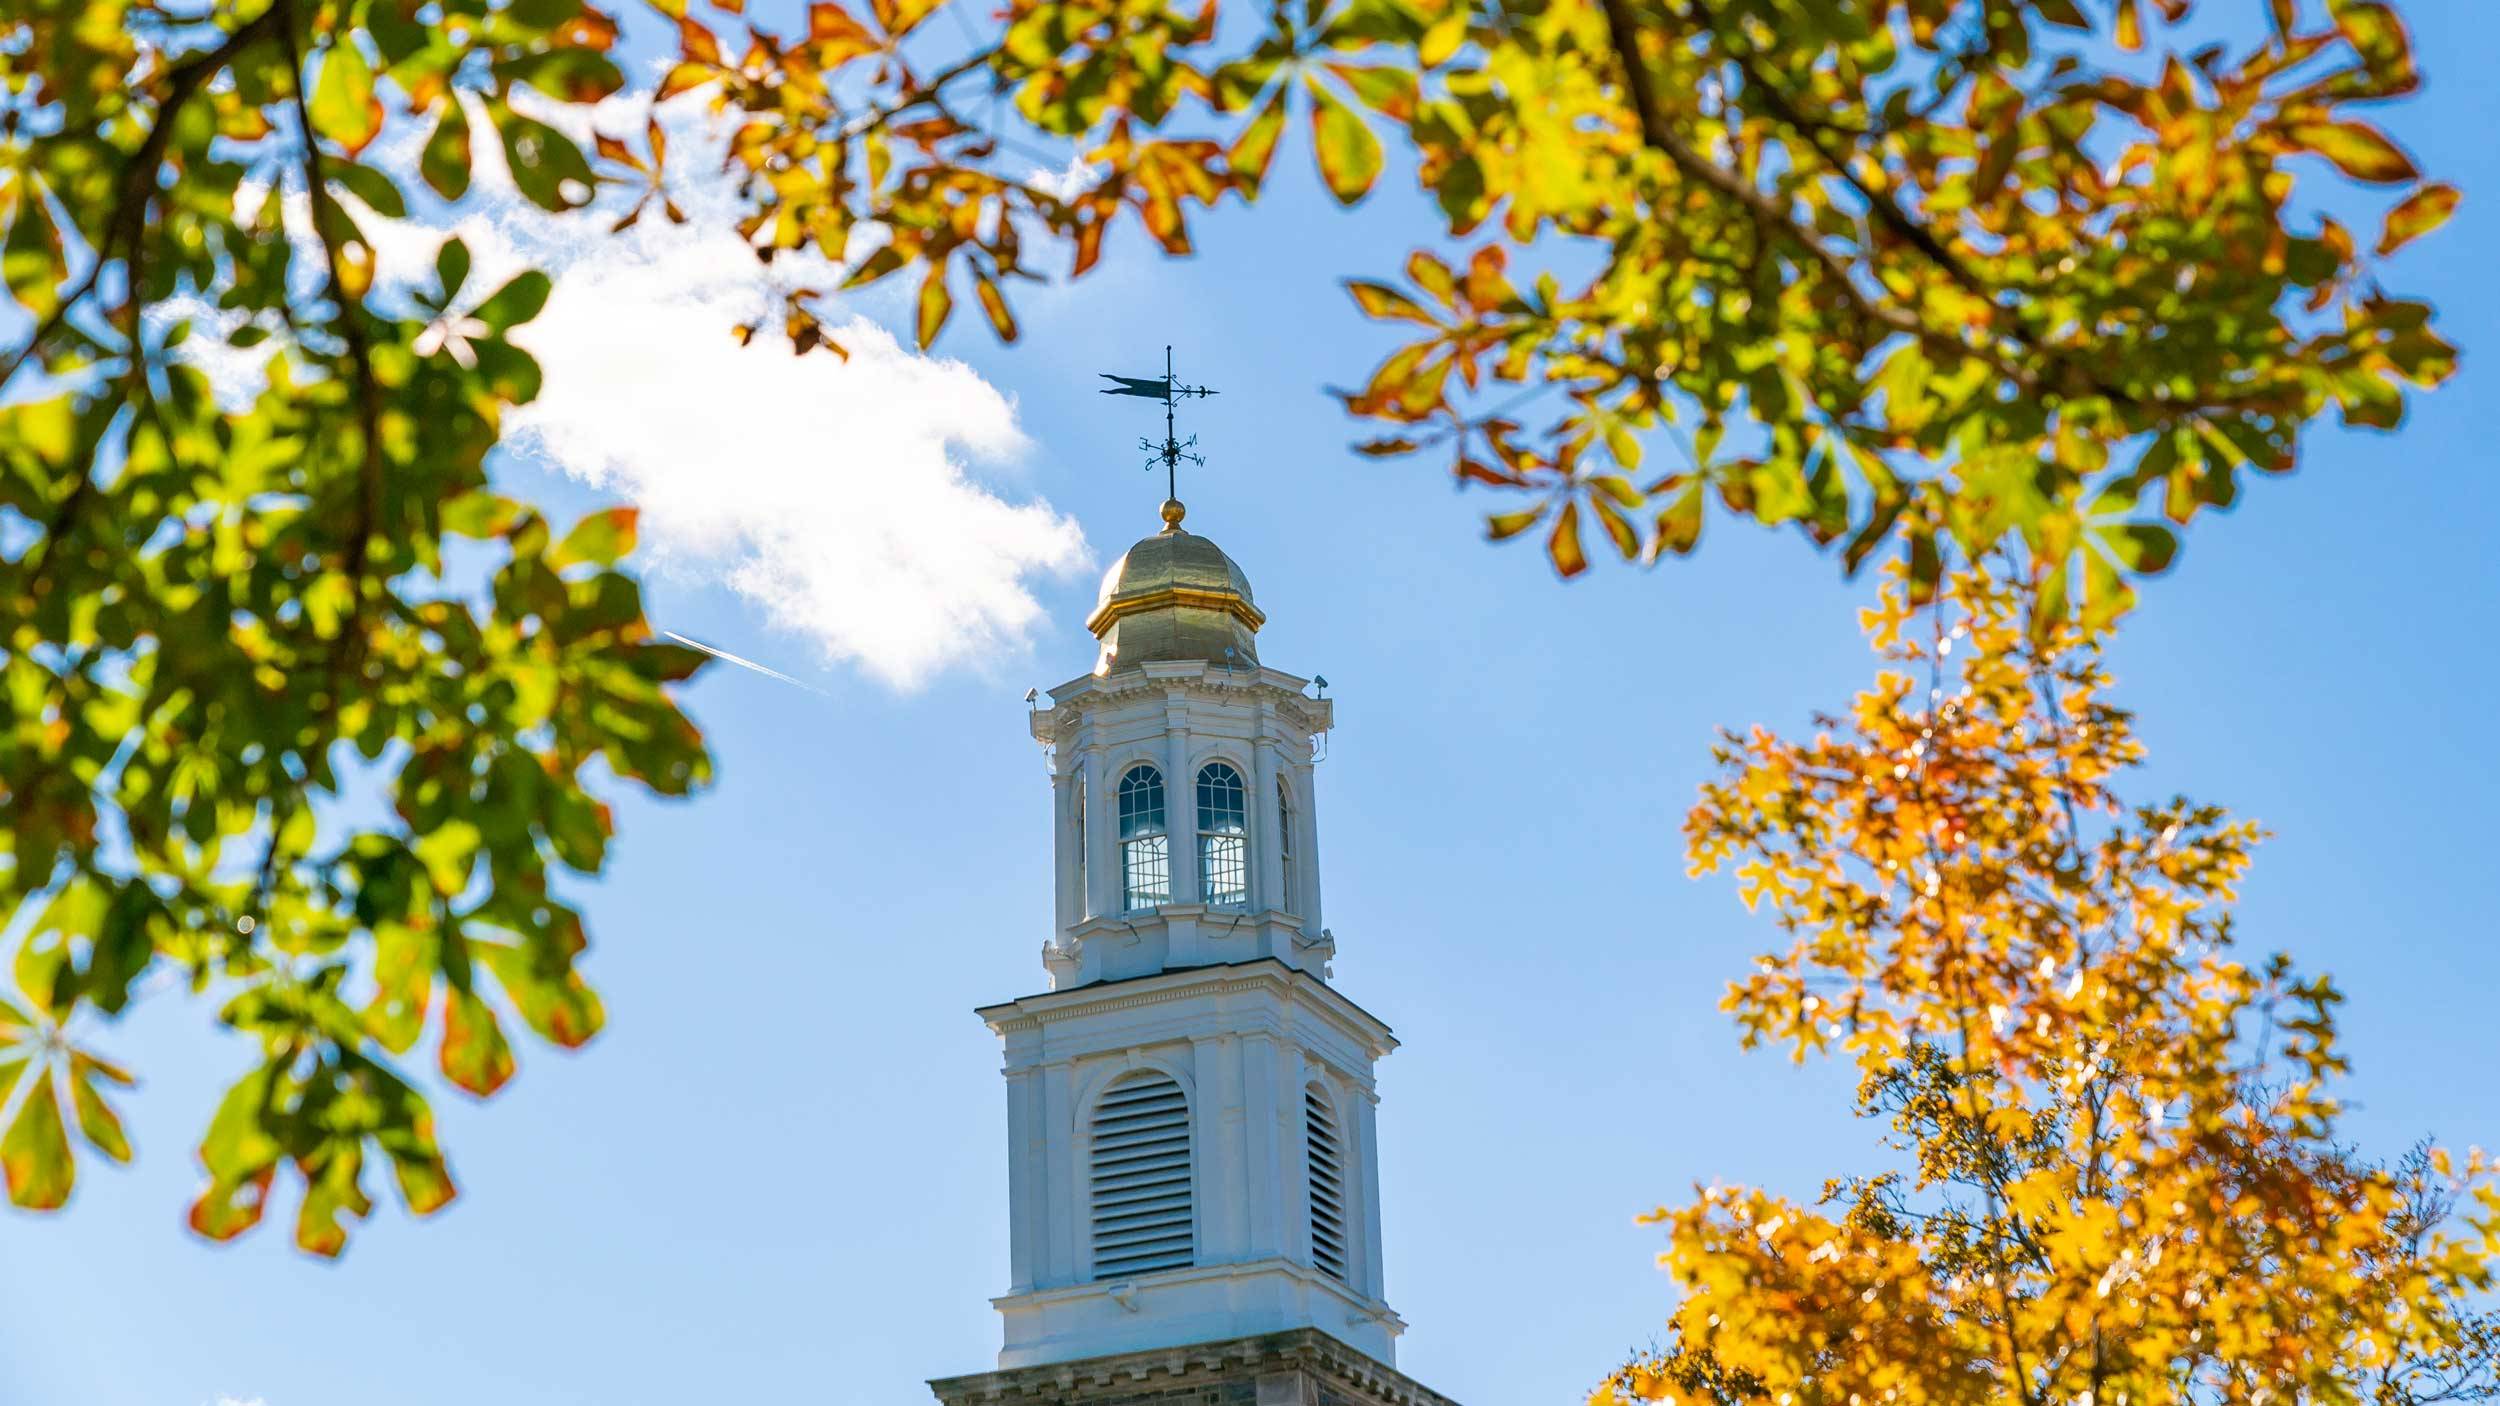 Alumni Memorial Chapel against a blue sky in autumn